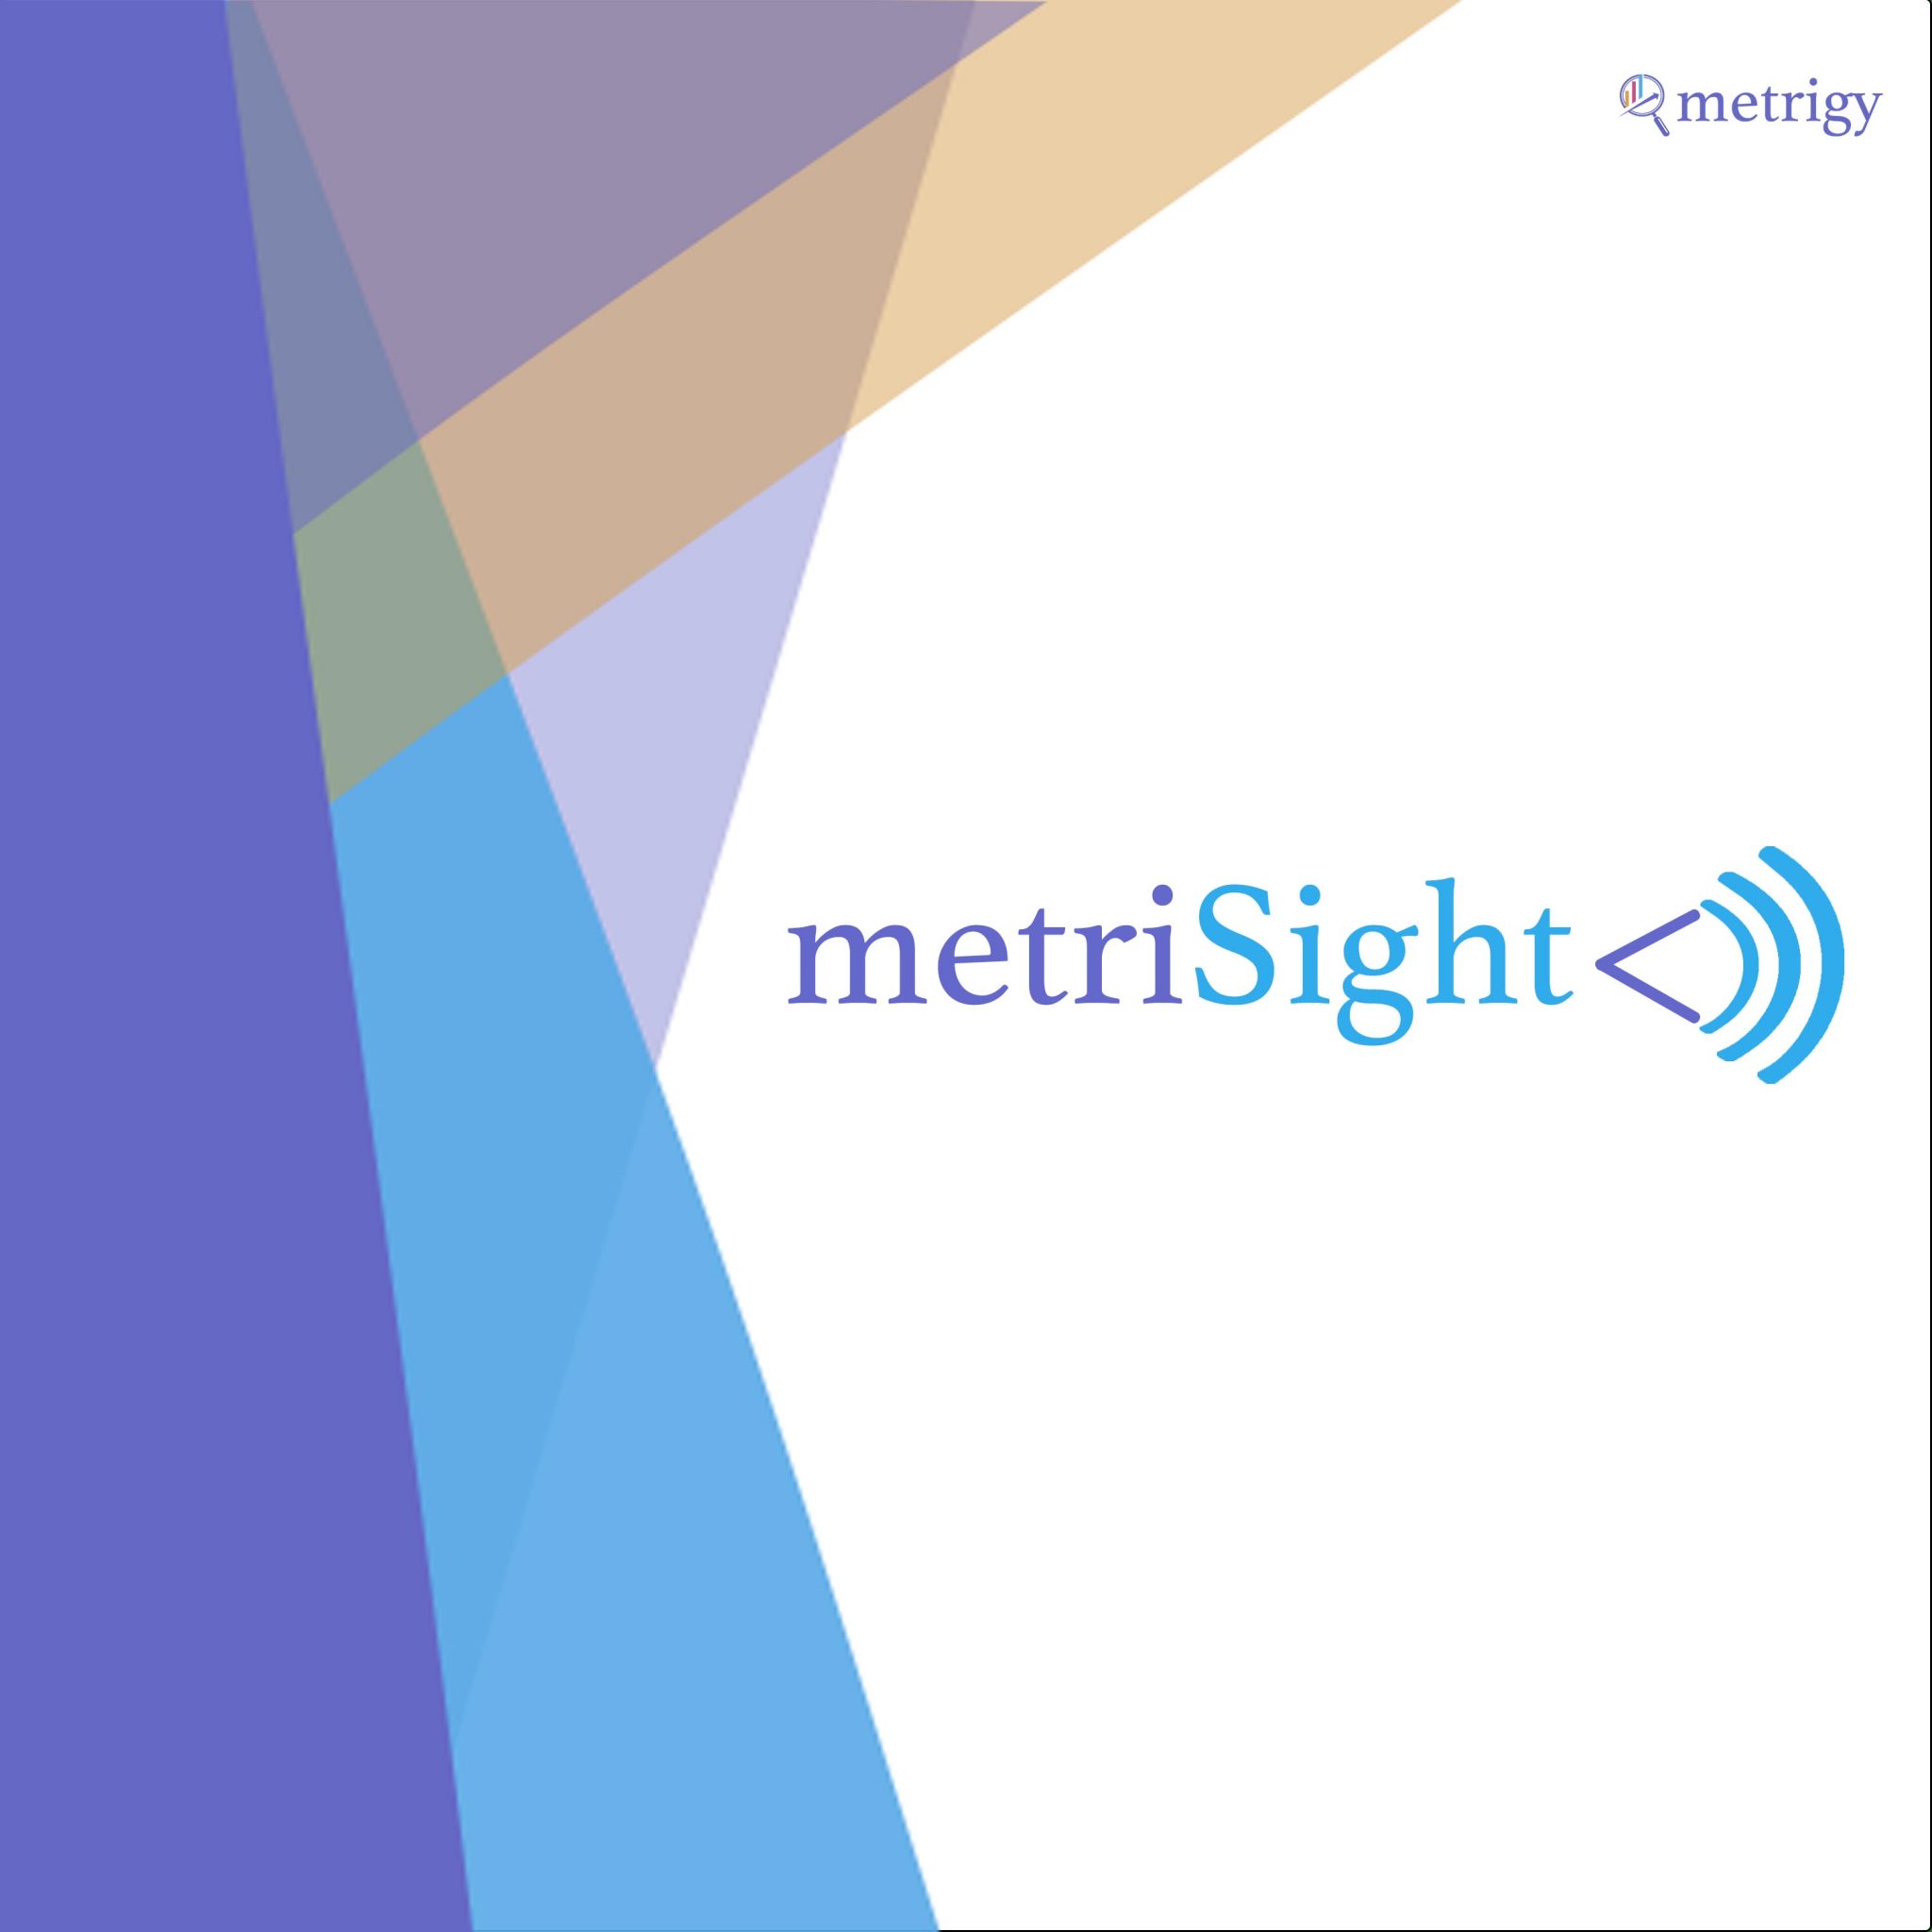 MetriSight Ep. 11 - A Provider's View on Enterprise Communications